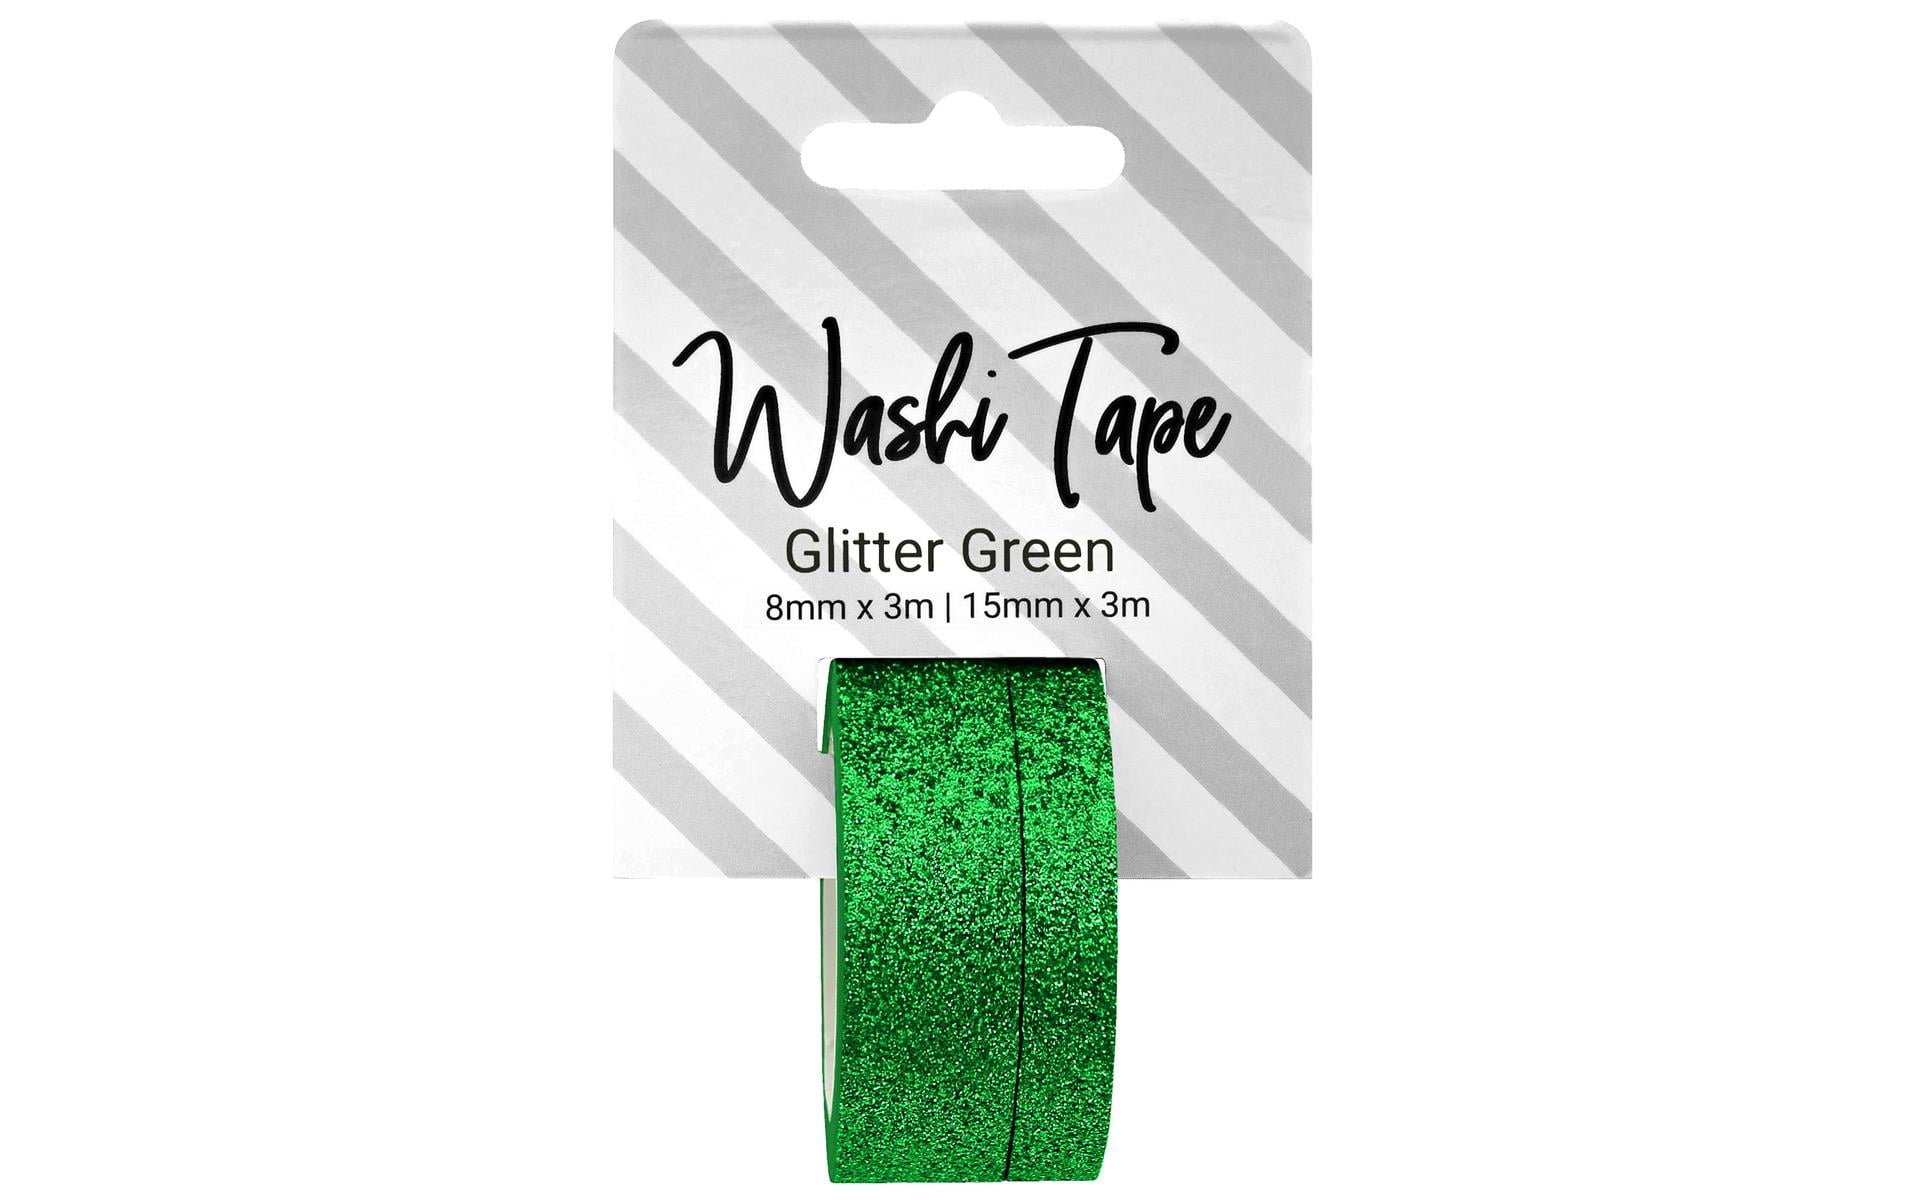 15mm x 10m Gold Foil Washi Tape Silver/Gold/Bronze/Rose/Green